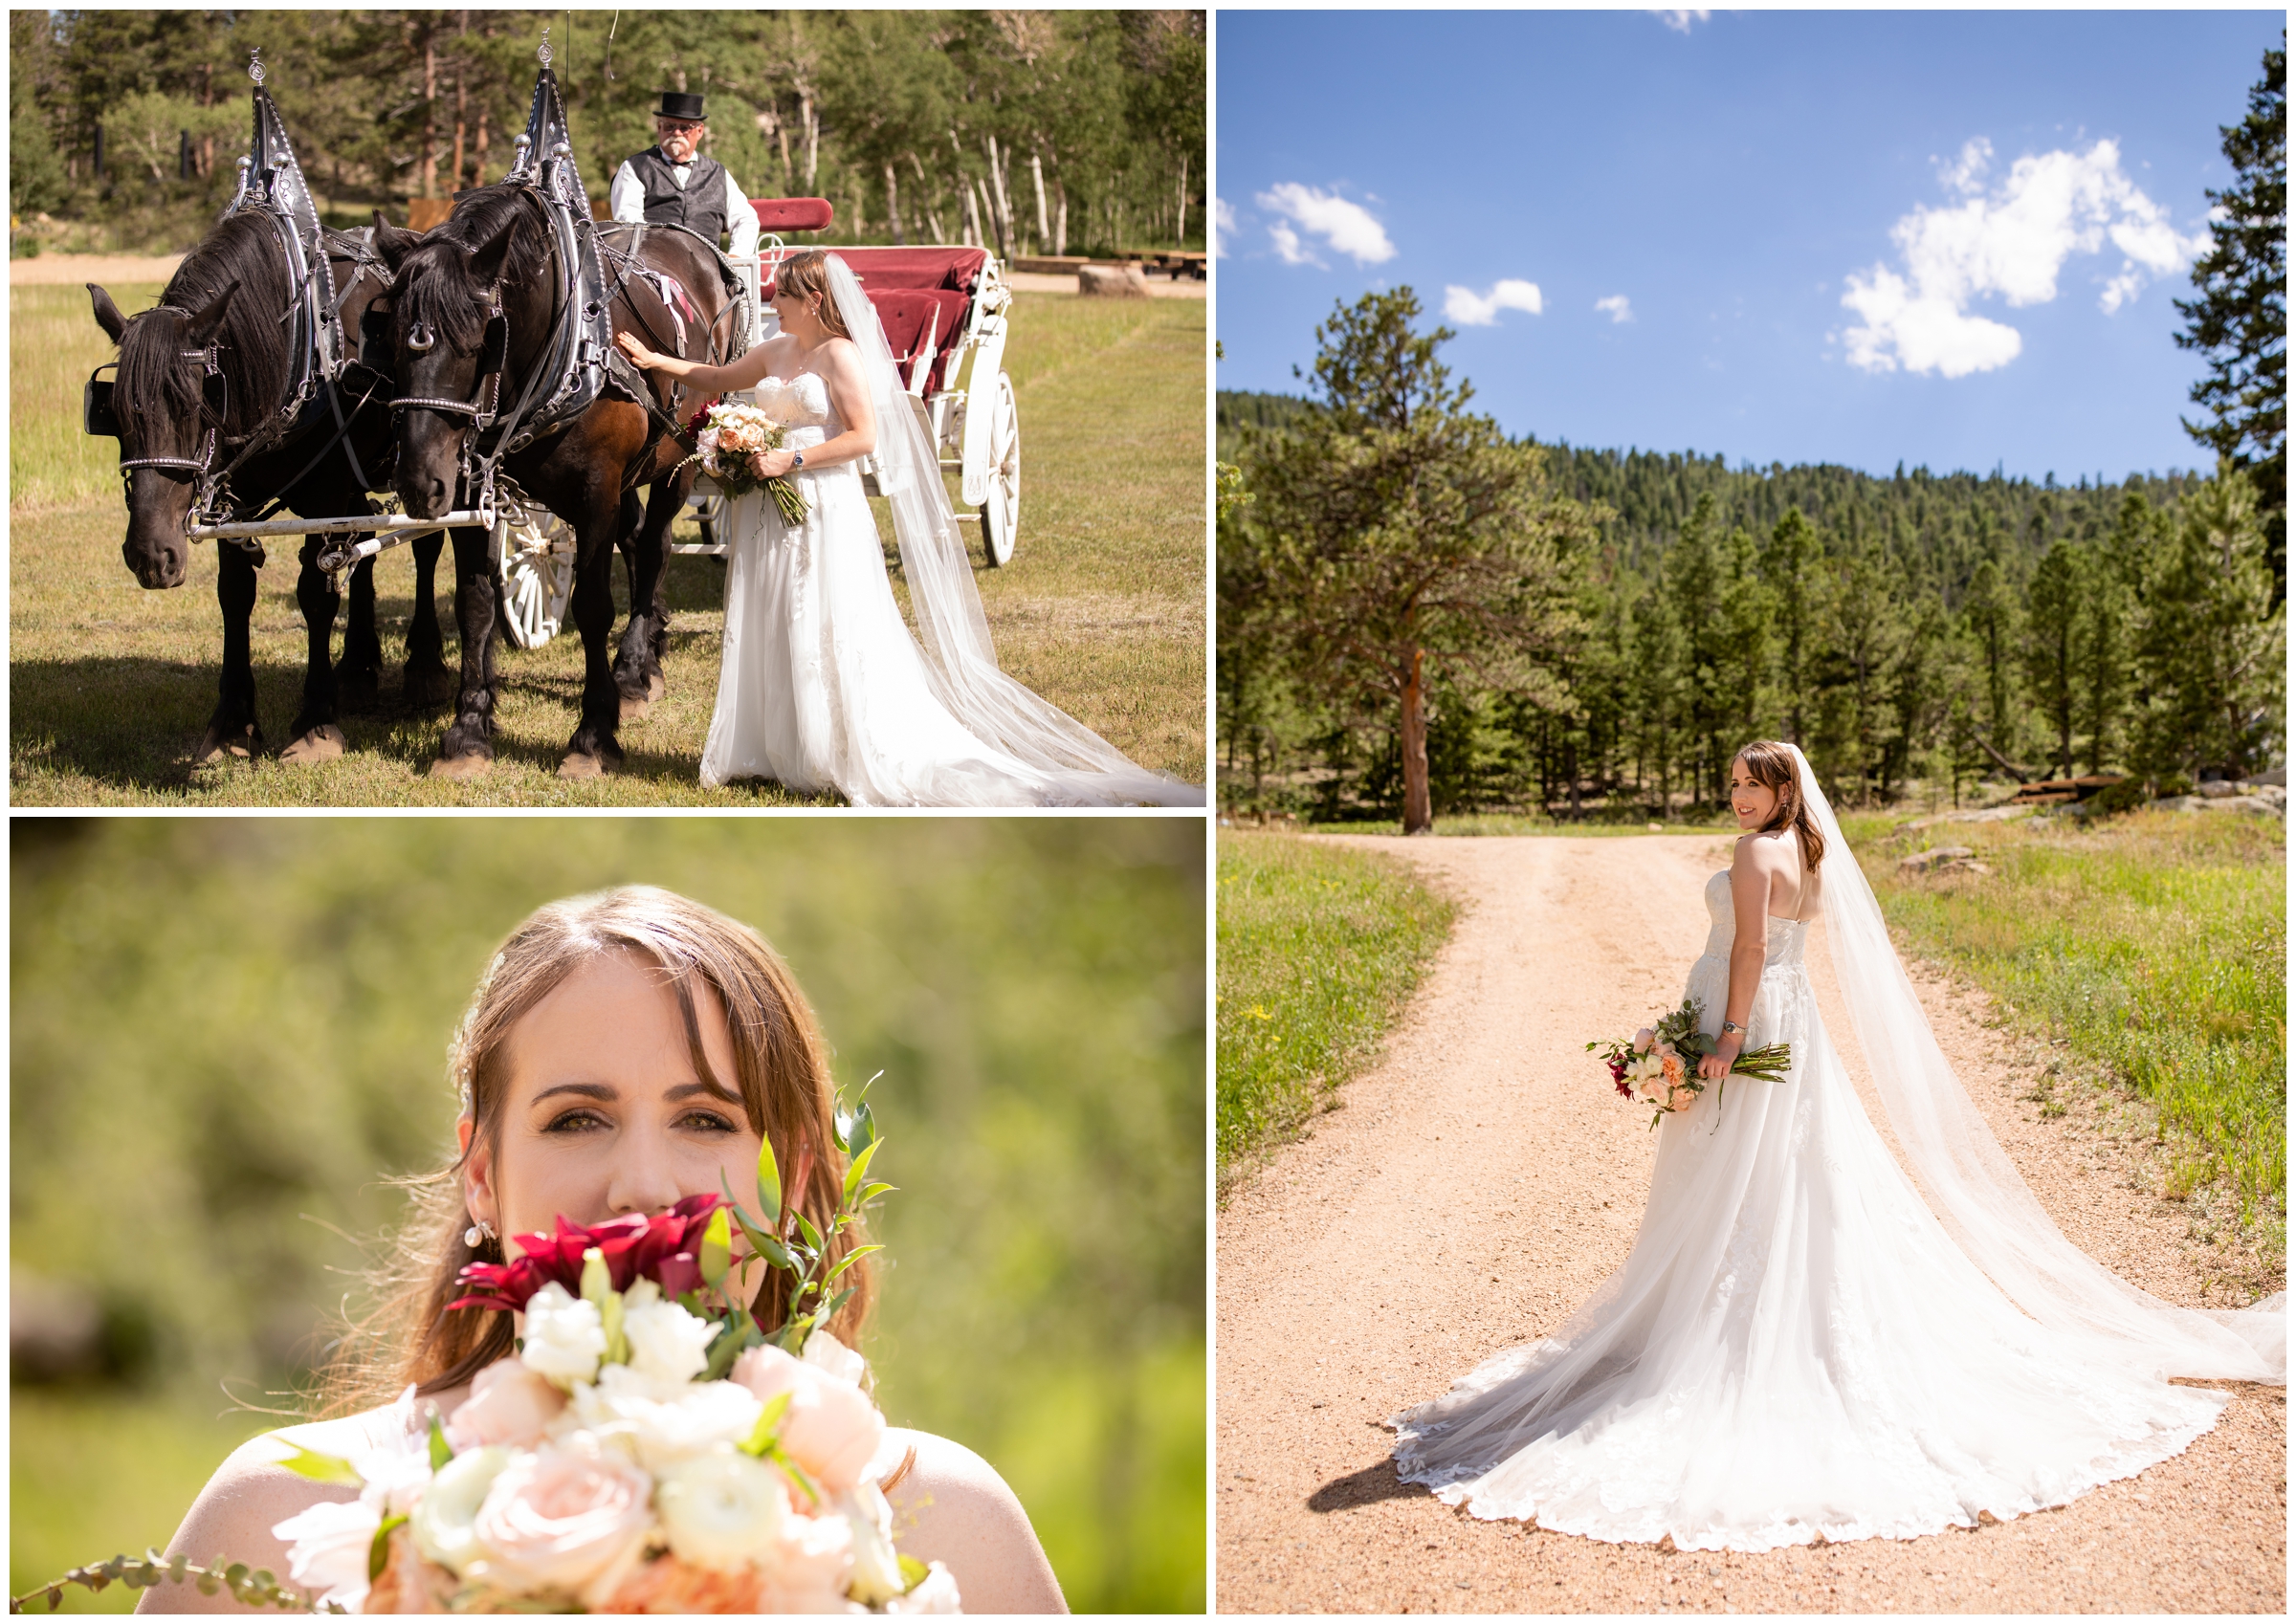 Hermit Park wedding photos during summer by Estes Park mountain photographer Plum Pretty Photography